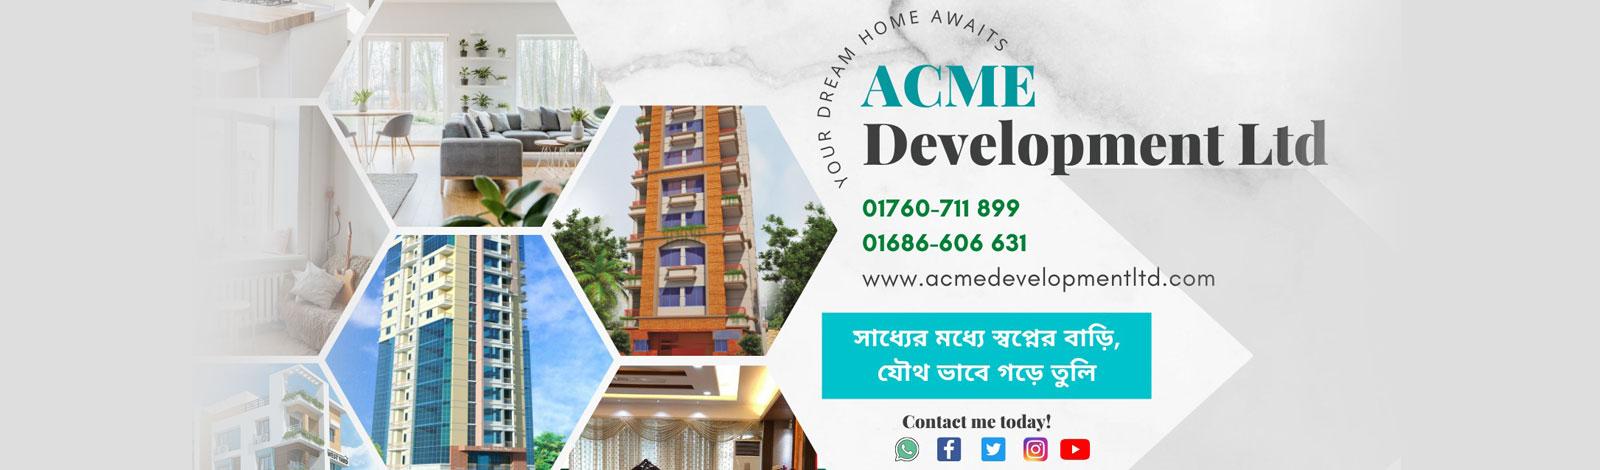 ACME Development Ltd. banner